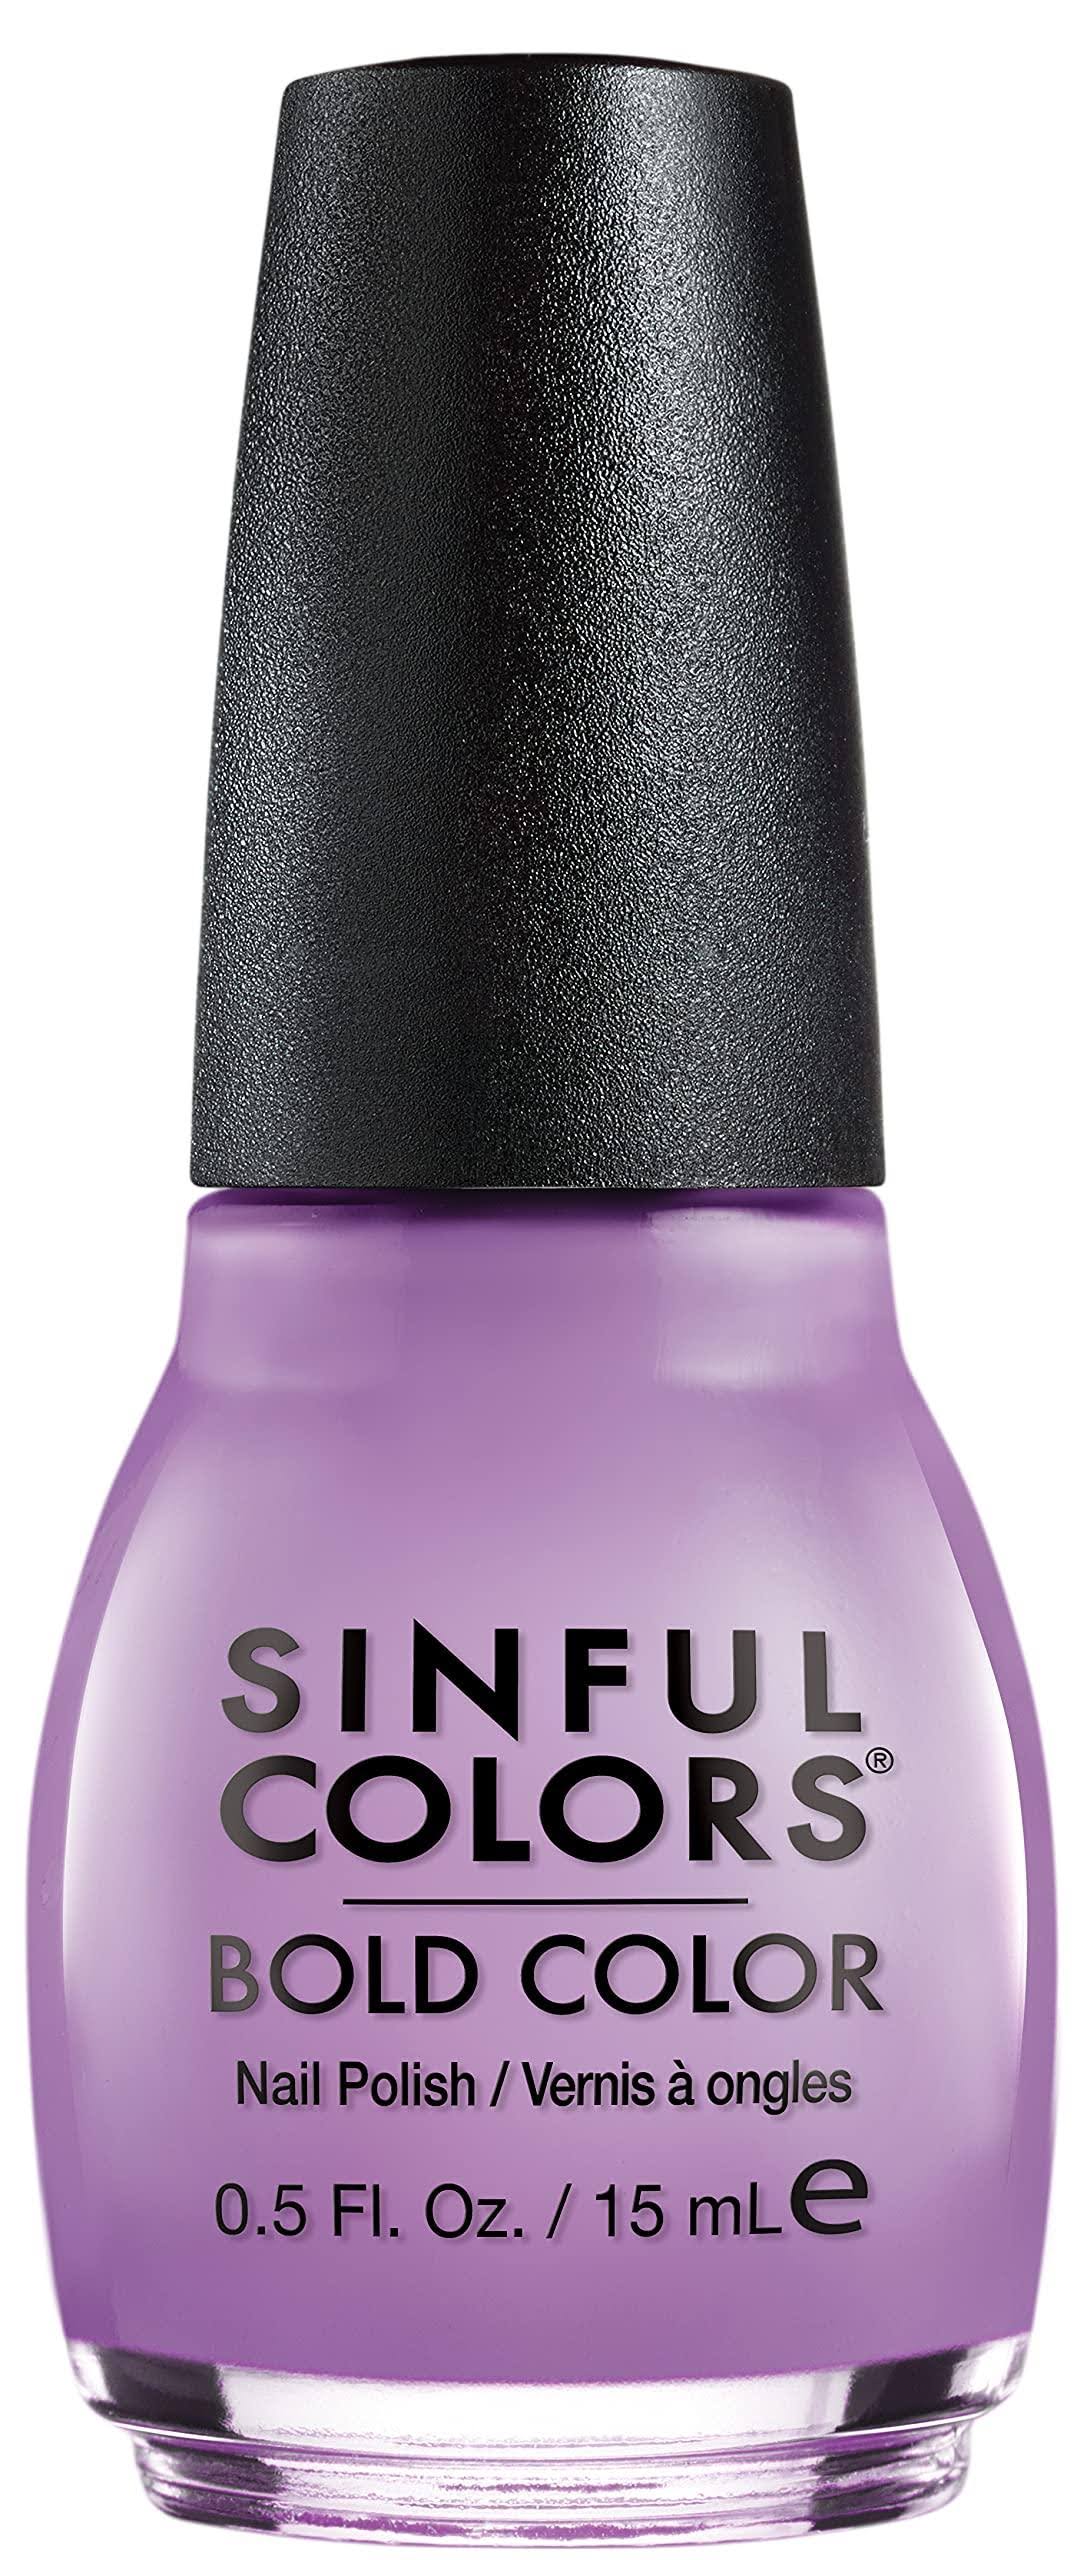 Sinful Colors Professional Nail Polish - Tempest, 0.5oz